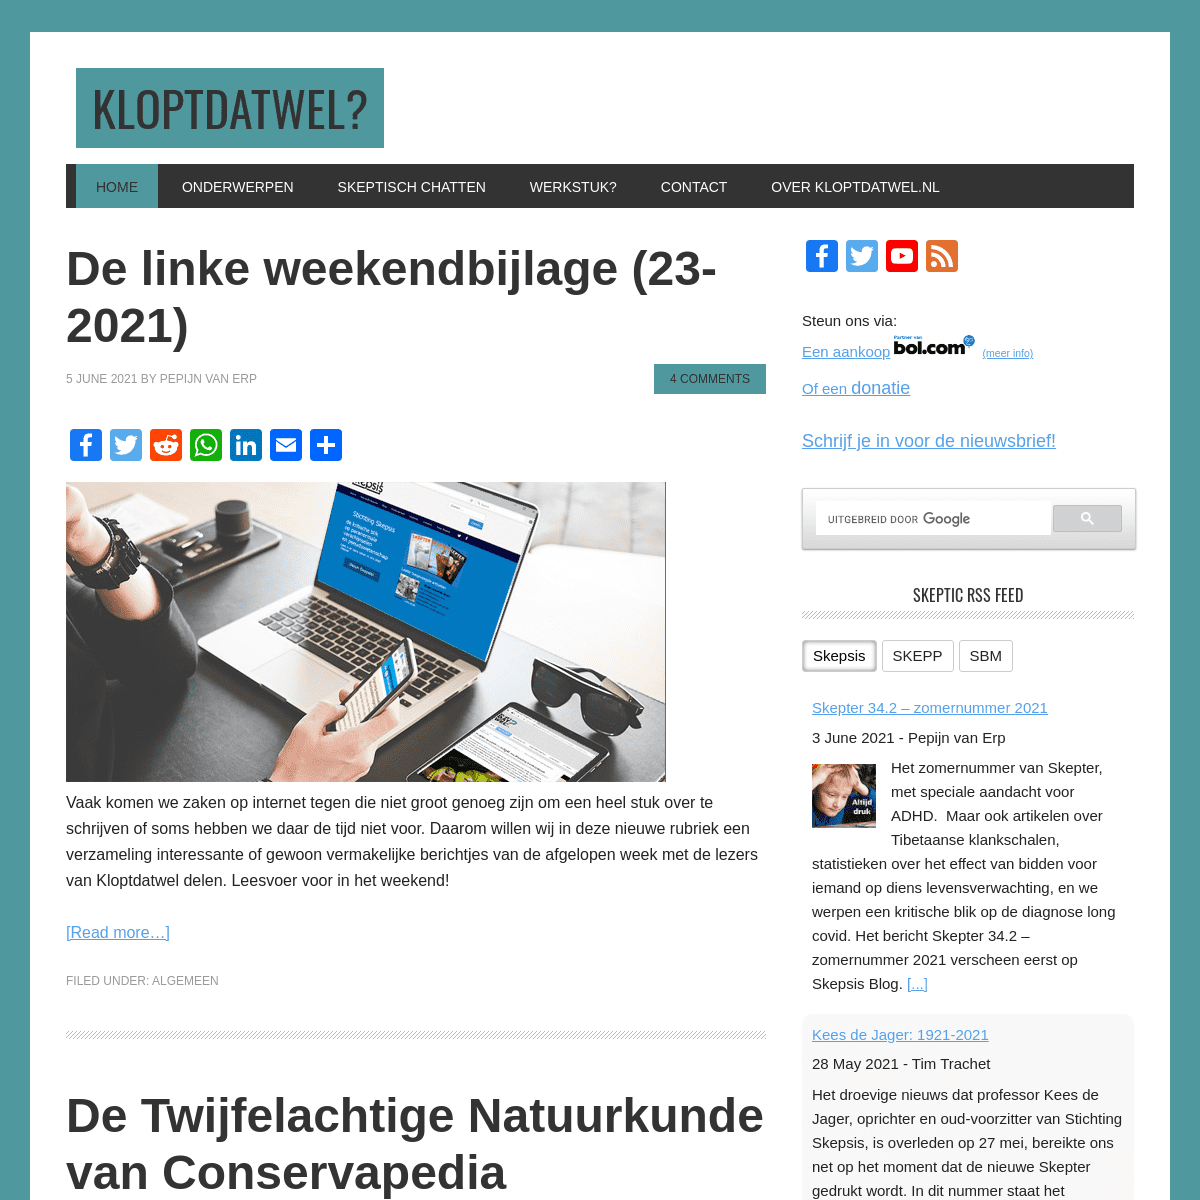 A complete backup of https://kloptdatwel.nl